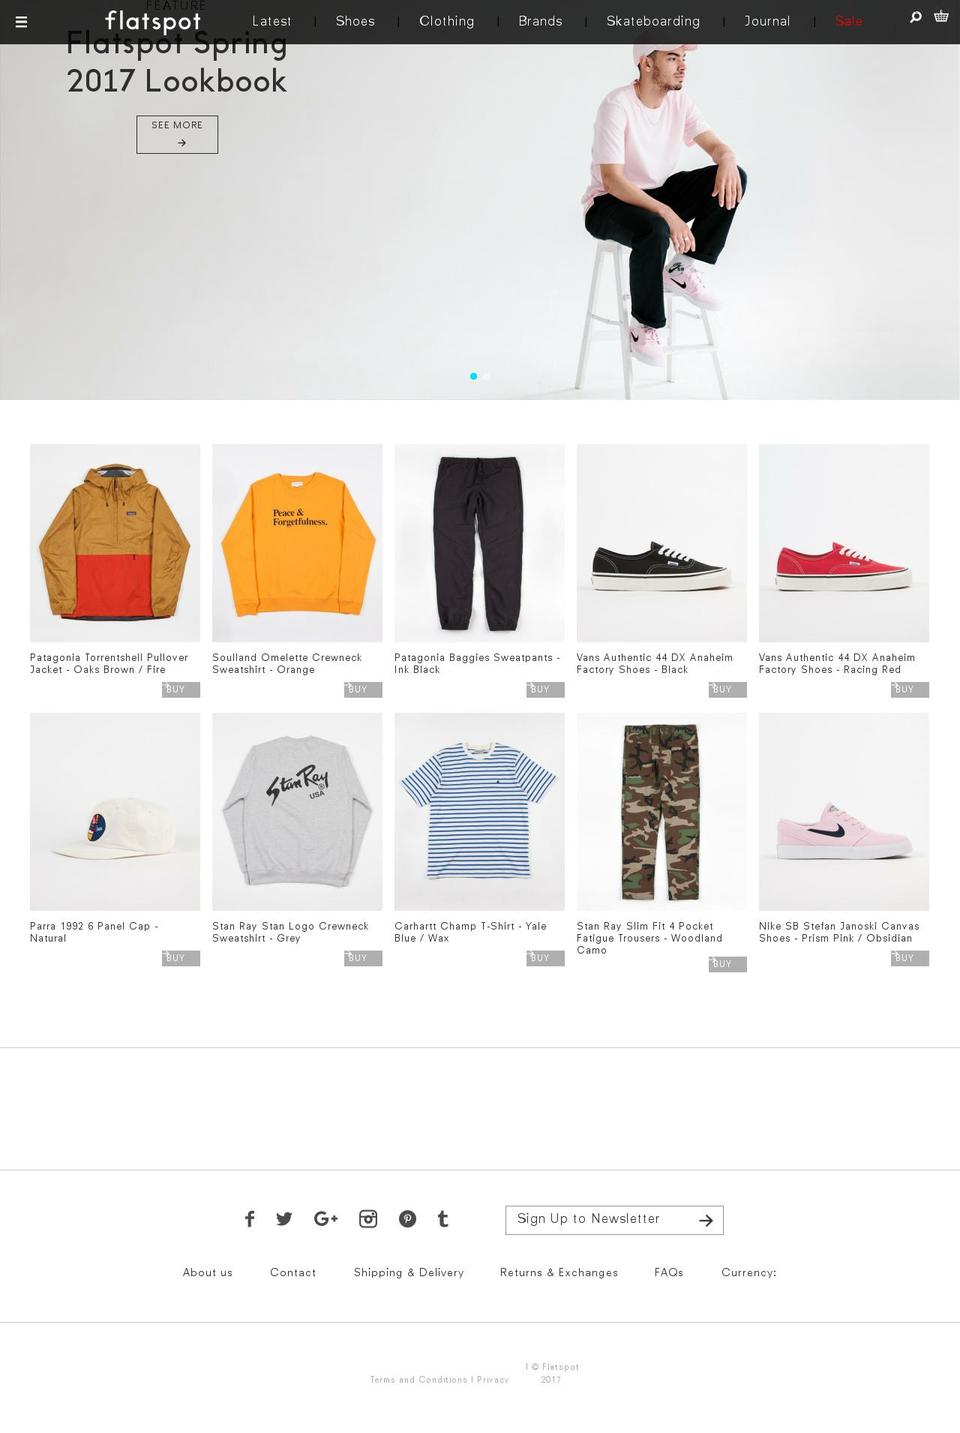 .. US Klaviyo popup Shopify theme site example flatspot.com